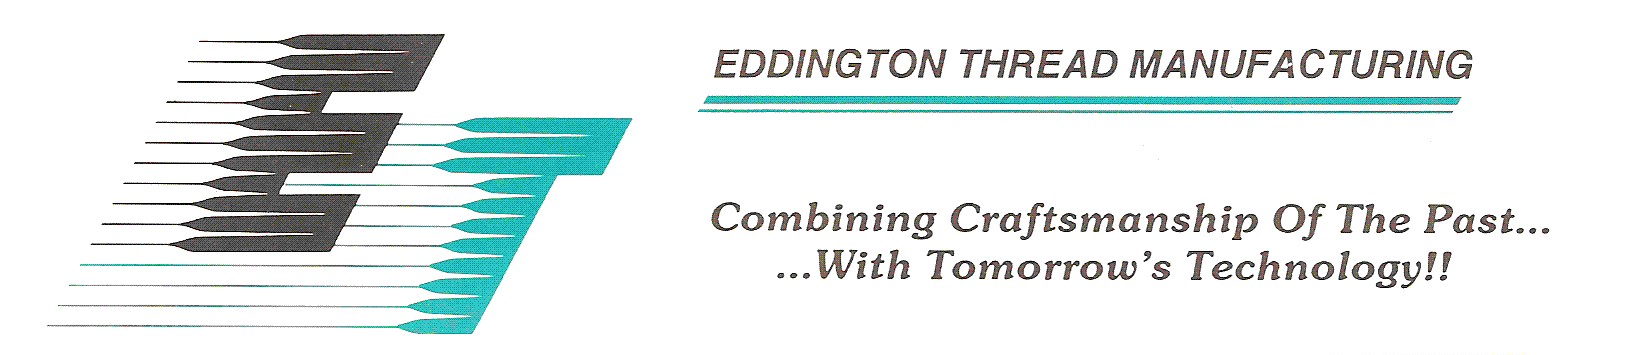 EDDINGTON THREAD MANUFACTURING COMPANY